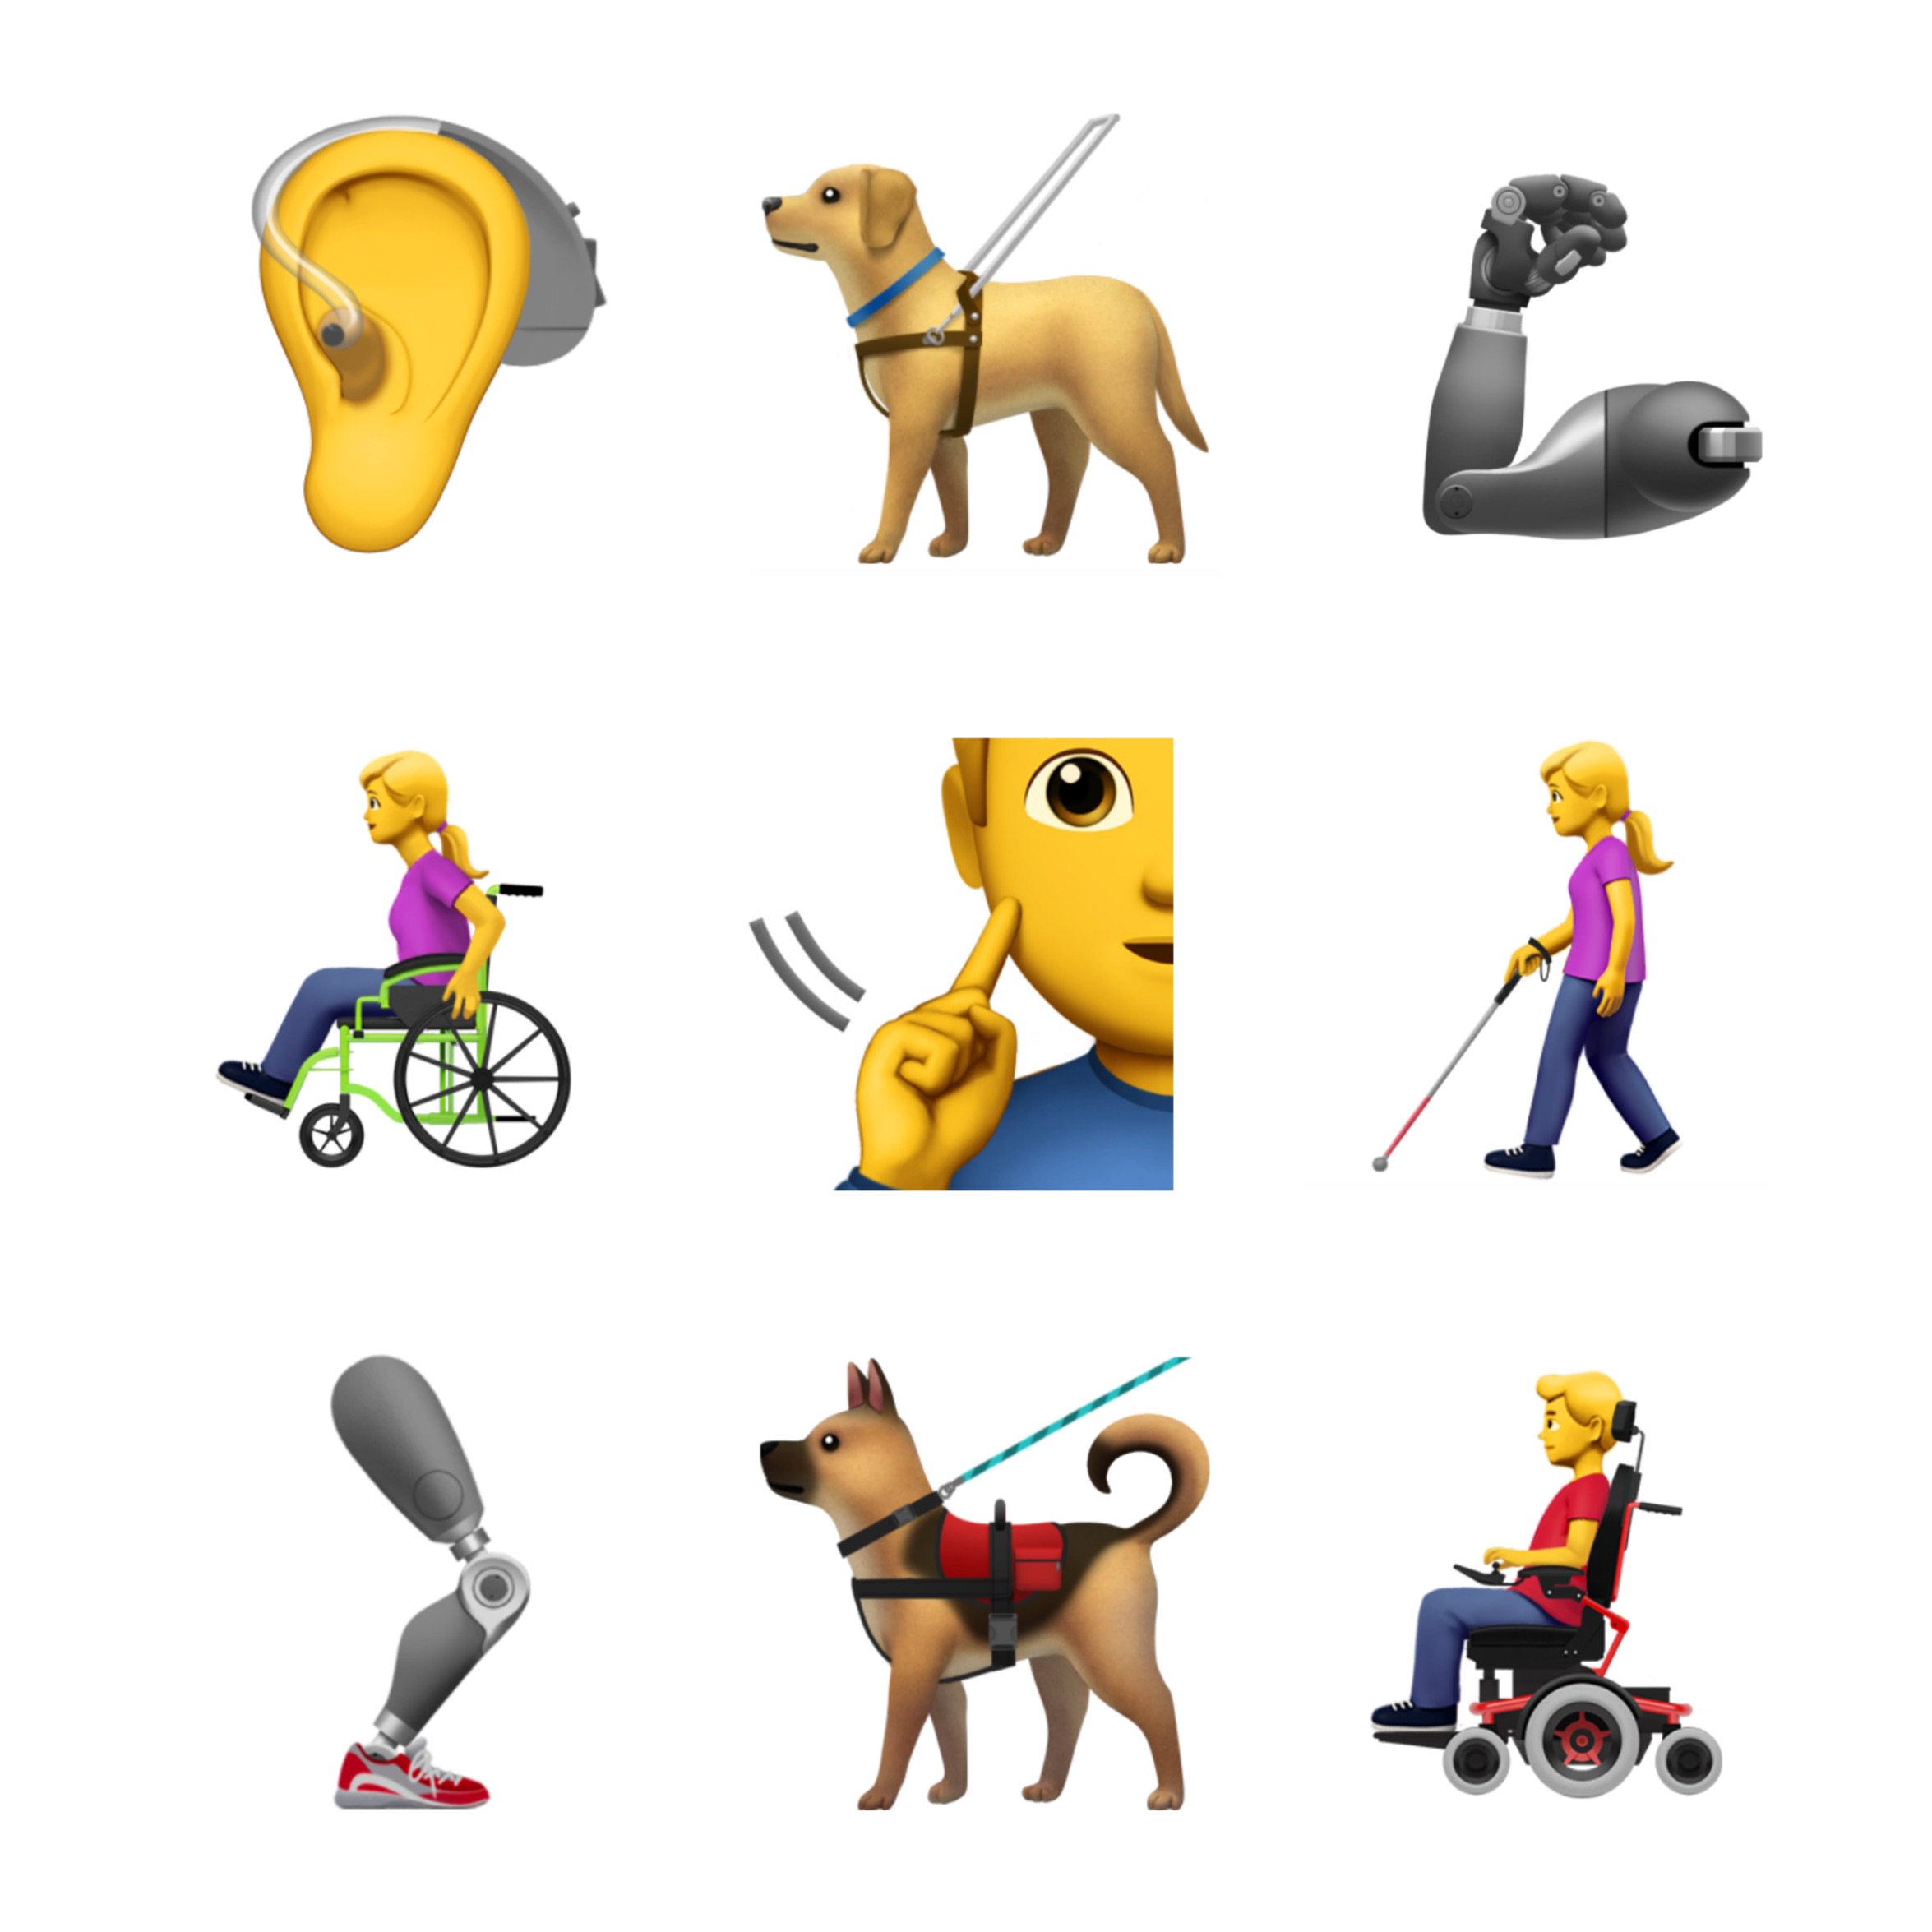 Novos emojis de acessibilidade propostos pela Apple